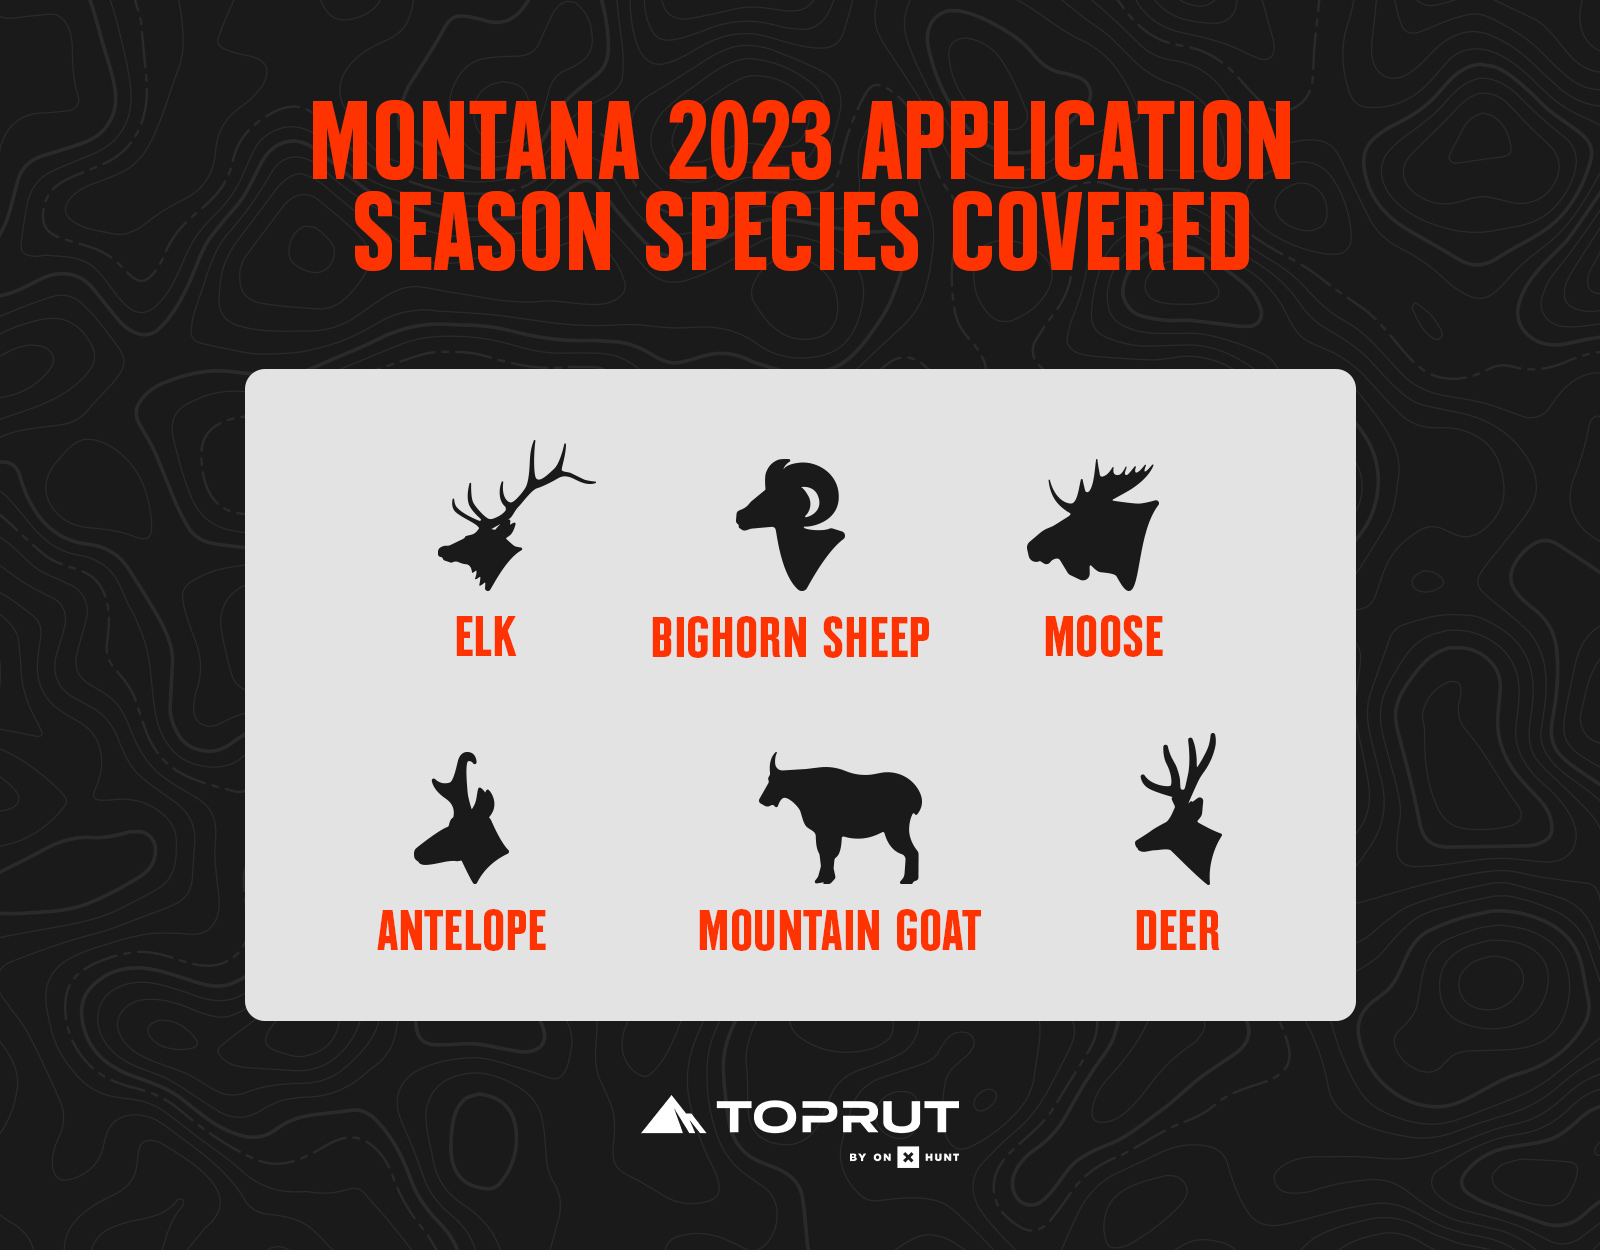 Montana application season species 